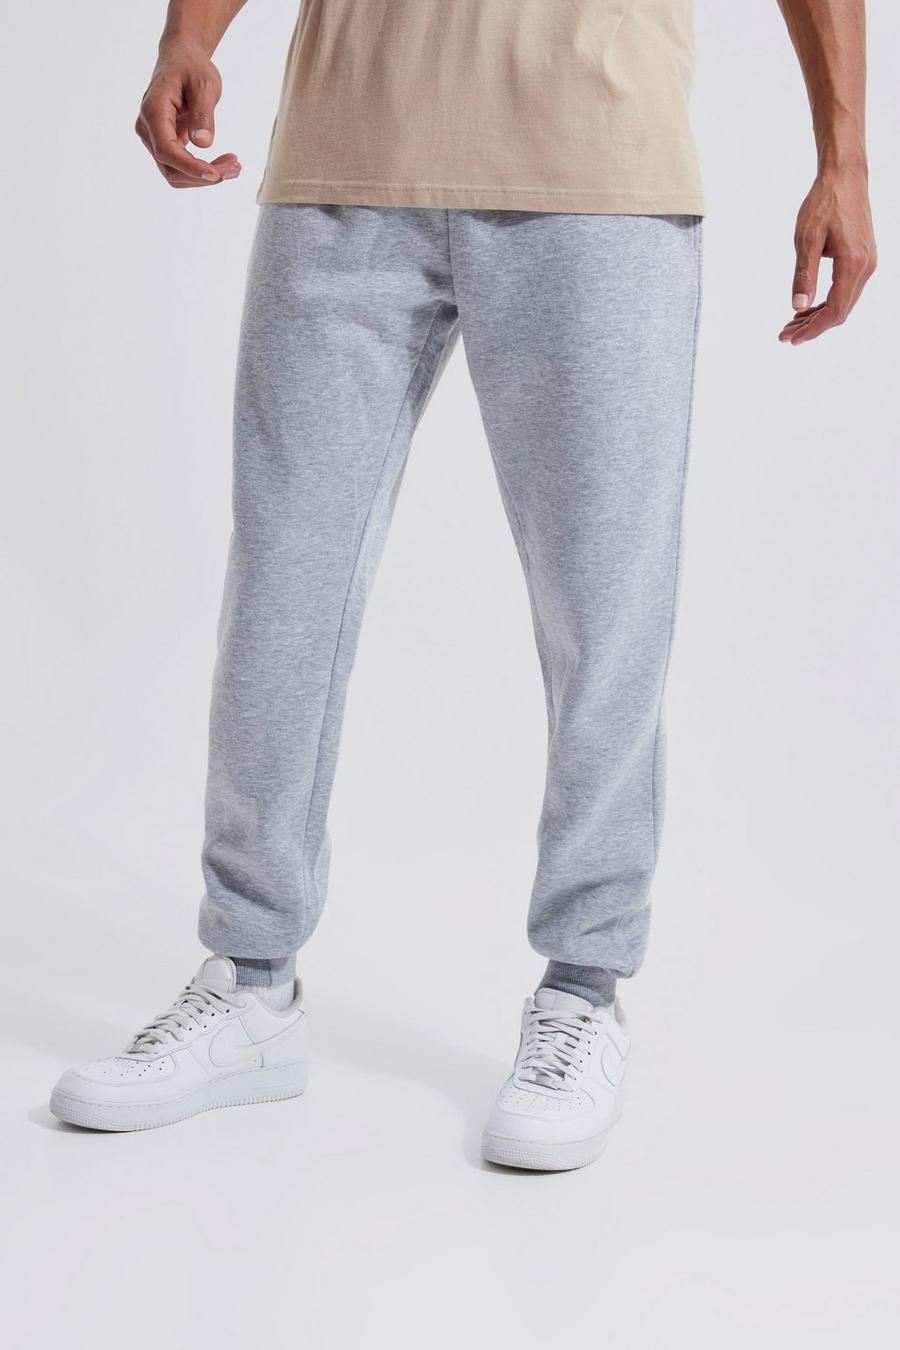 Pantalón deportivo Tall básico Regular, Grey marl gris